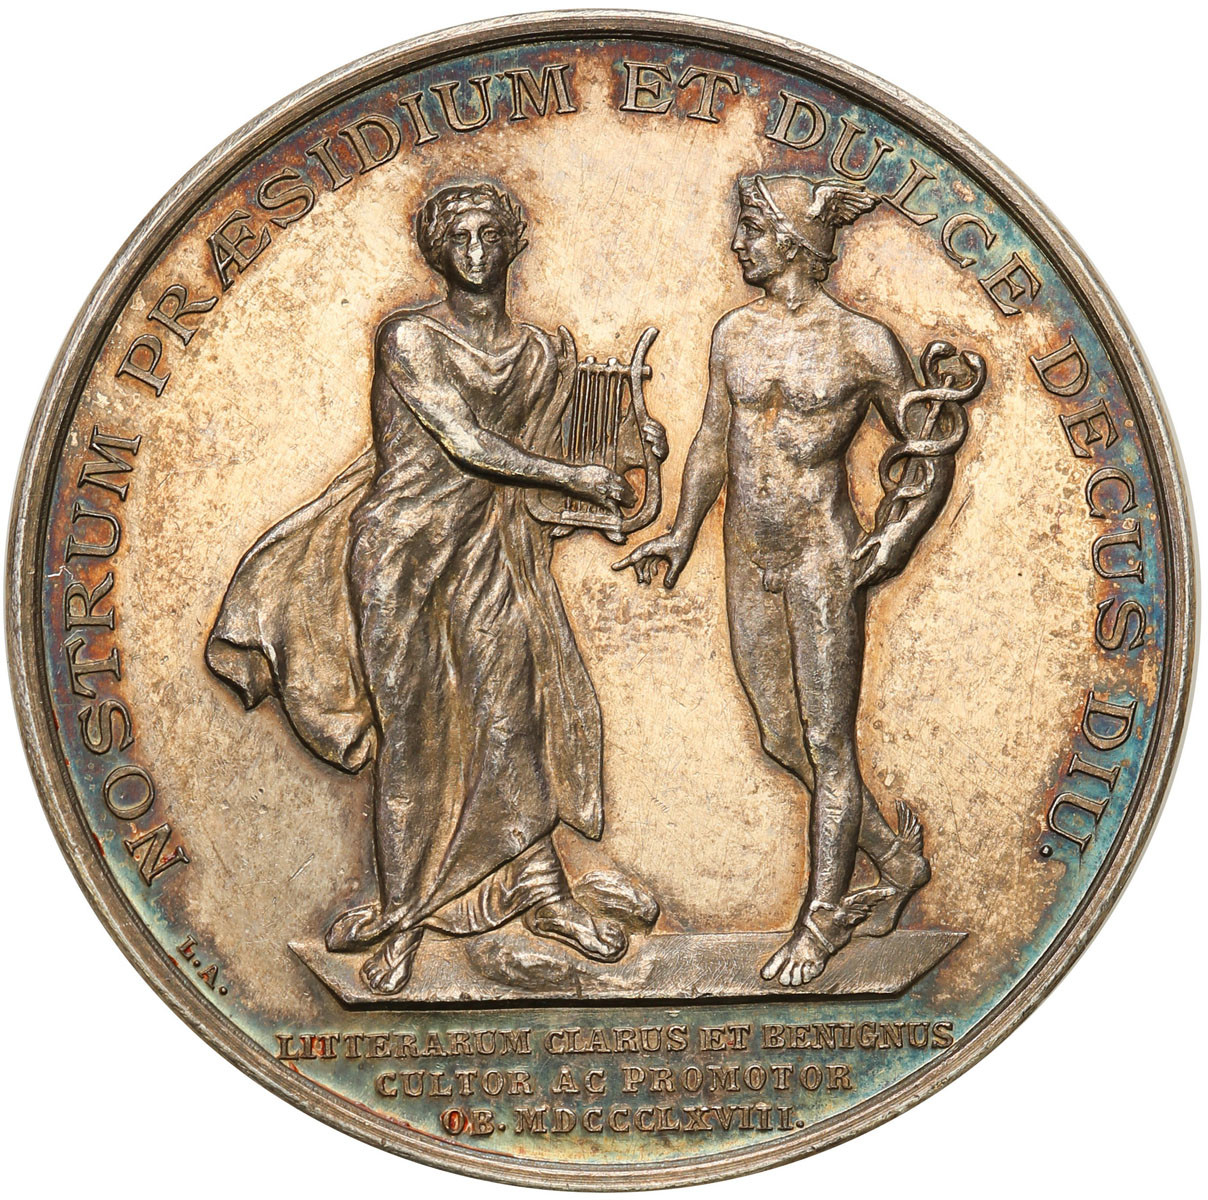 Szwecja, Karol XV (1859-1872). Medal 1868 - szwedzki poeta Bernhard von Beskow, srebro